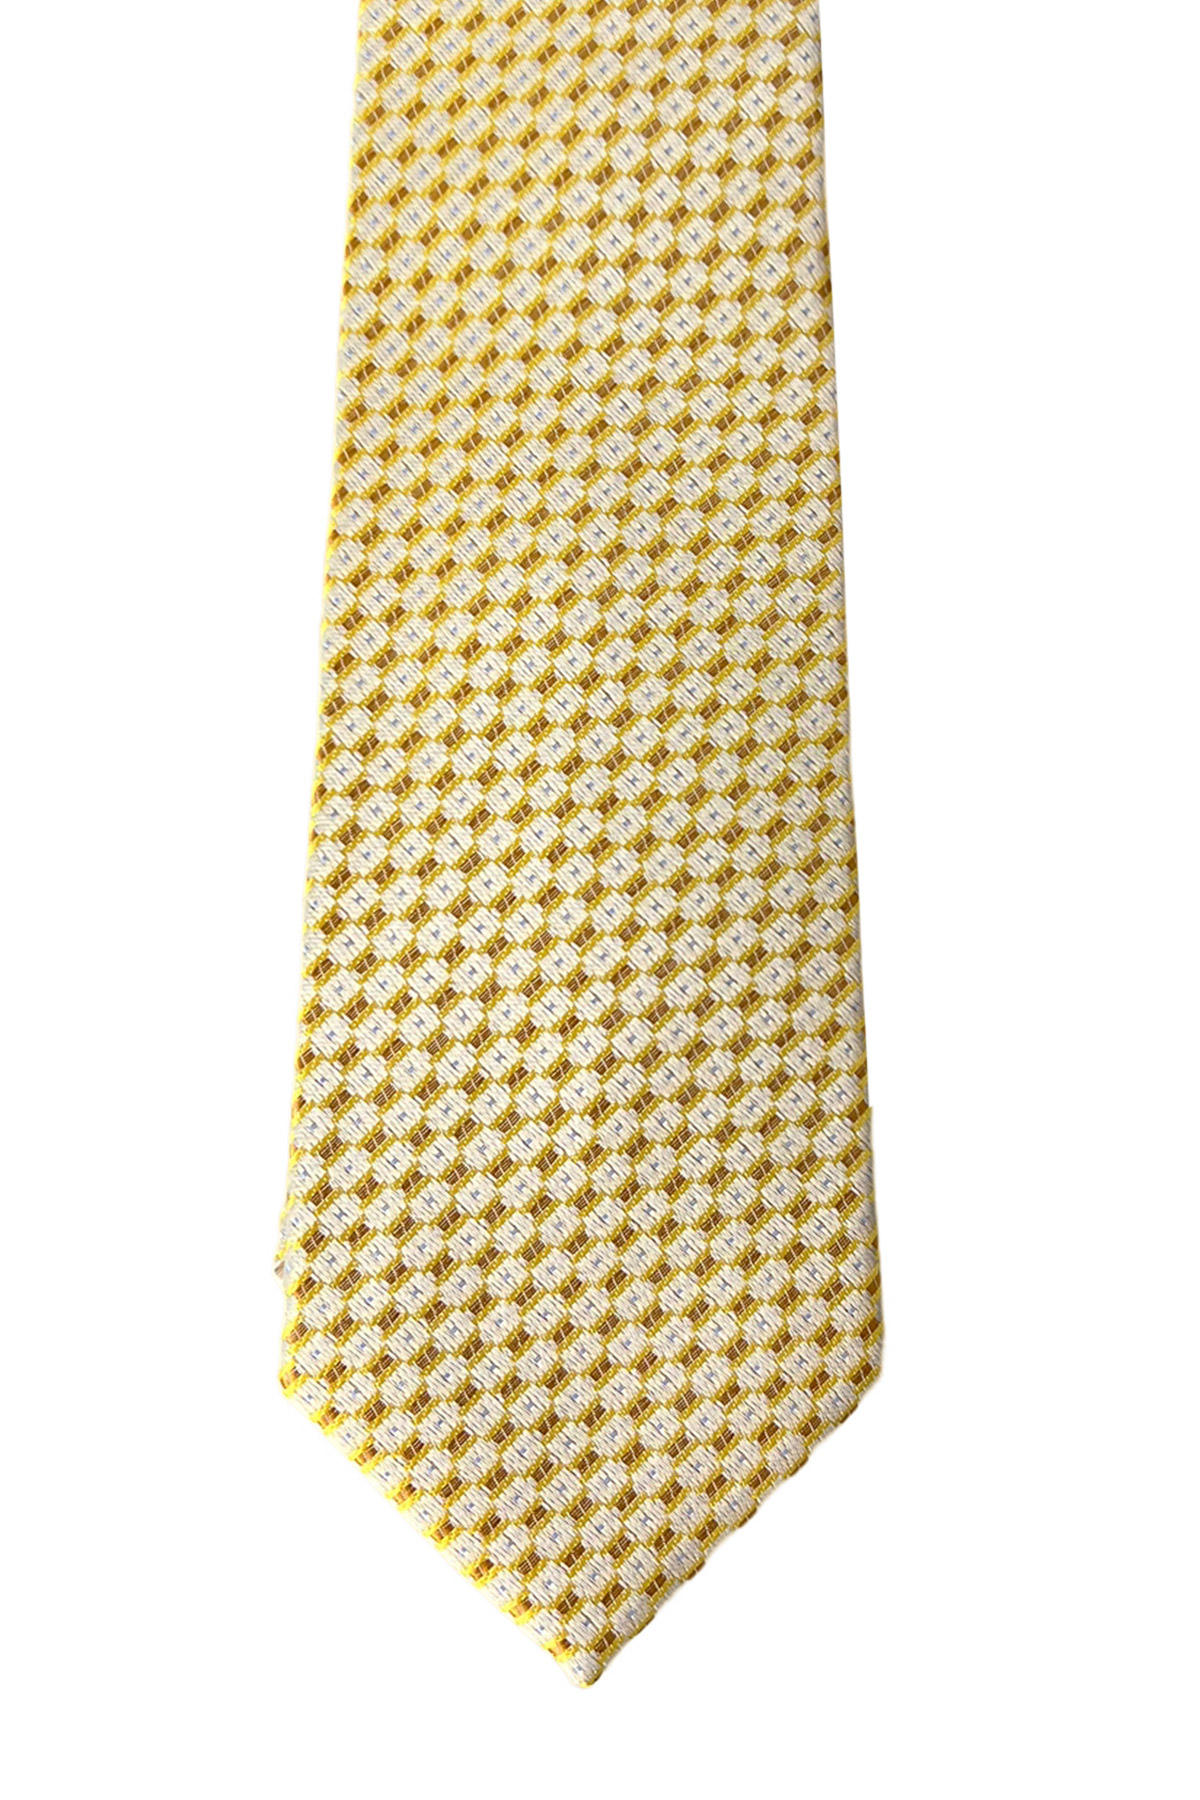 Cravatta uomo beige fantasia quadretti coccio 8cm da cerimonia elegante effetto seta